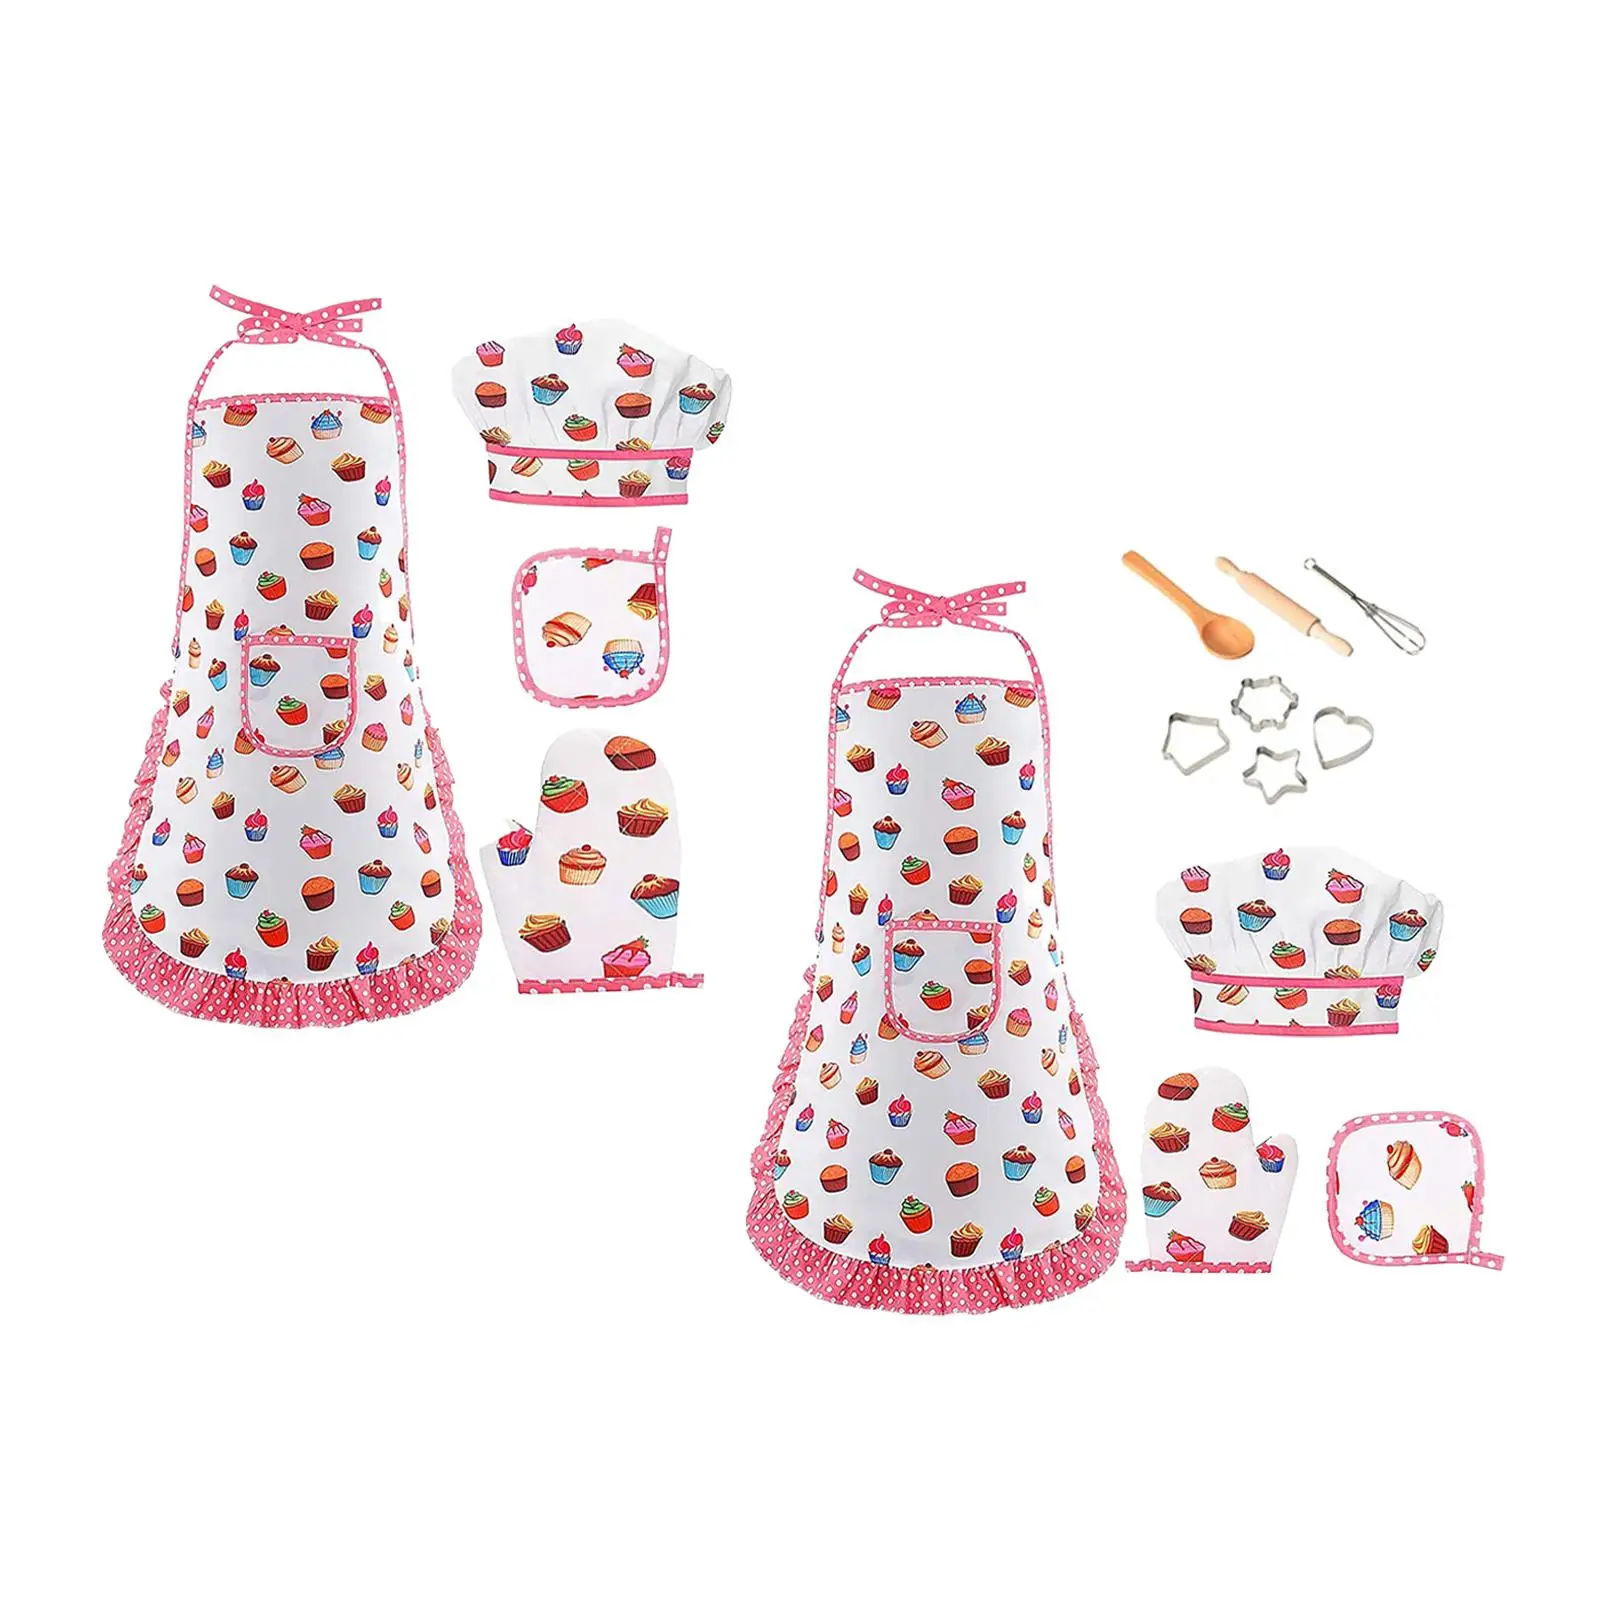 Chef Clothing Set Kids Apron Developmental Toy Cooking Baking Set for Toddlers Children Girls Birthday Gift